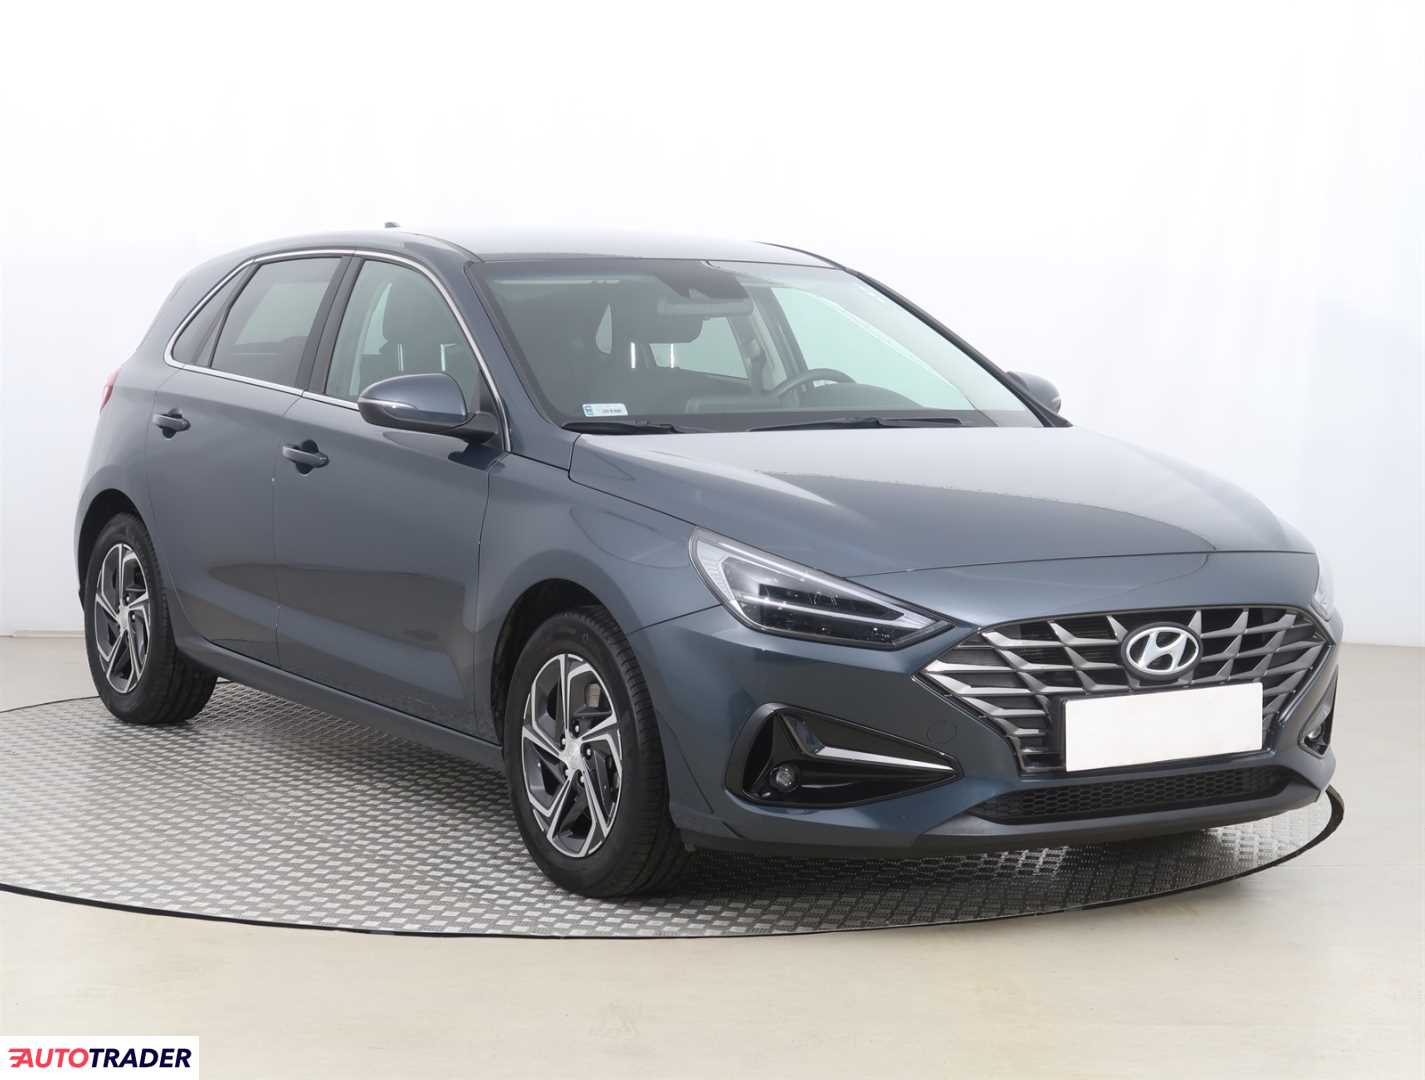 Hyundai i30 1.5 108 KM 2022r. (Piaseczno)